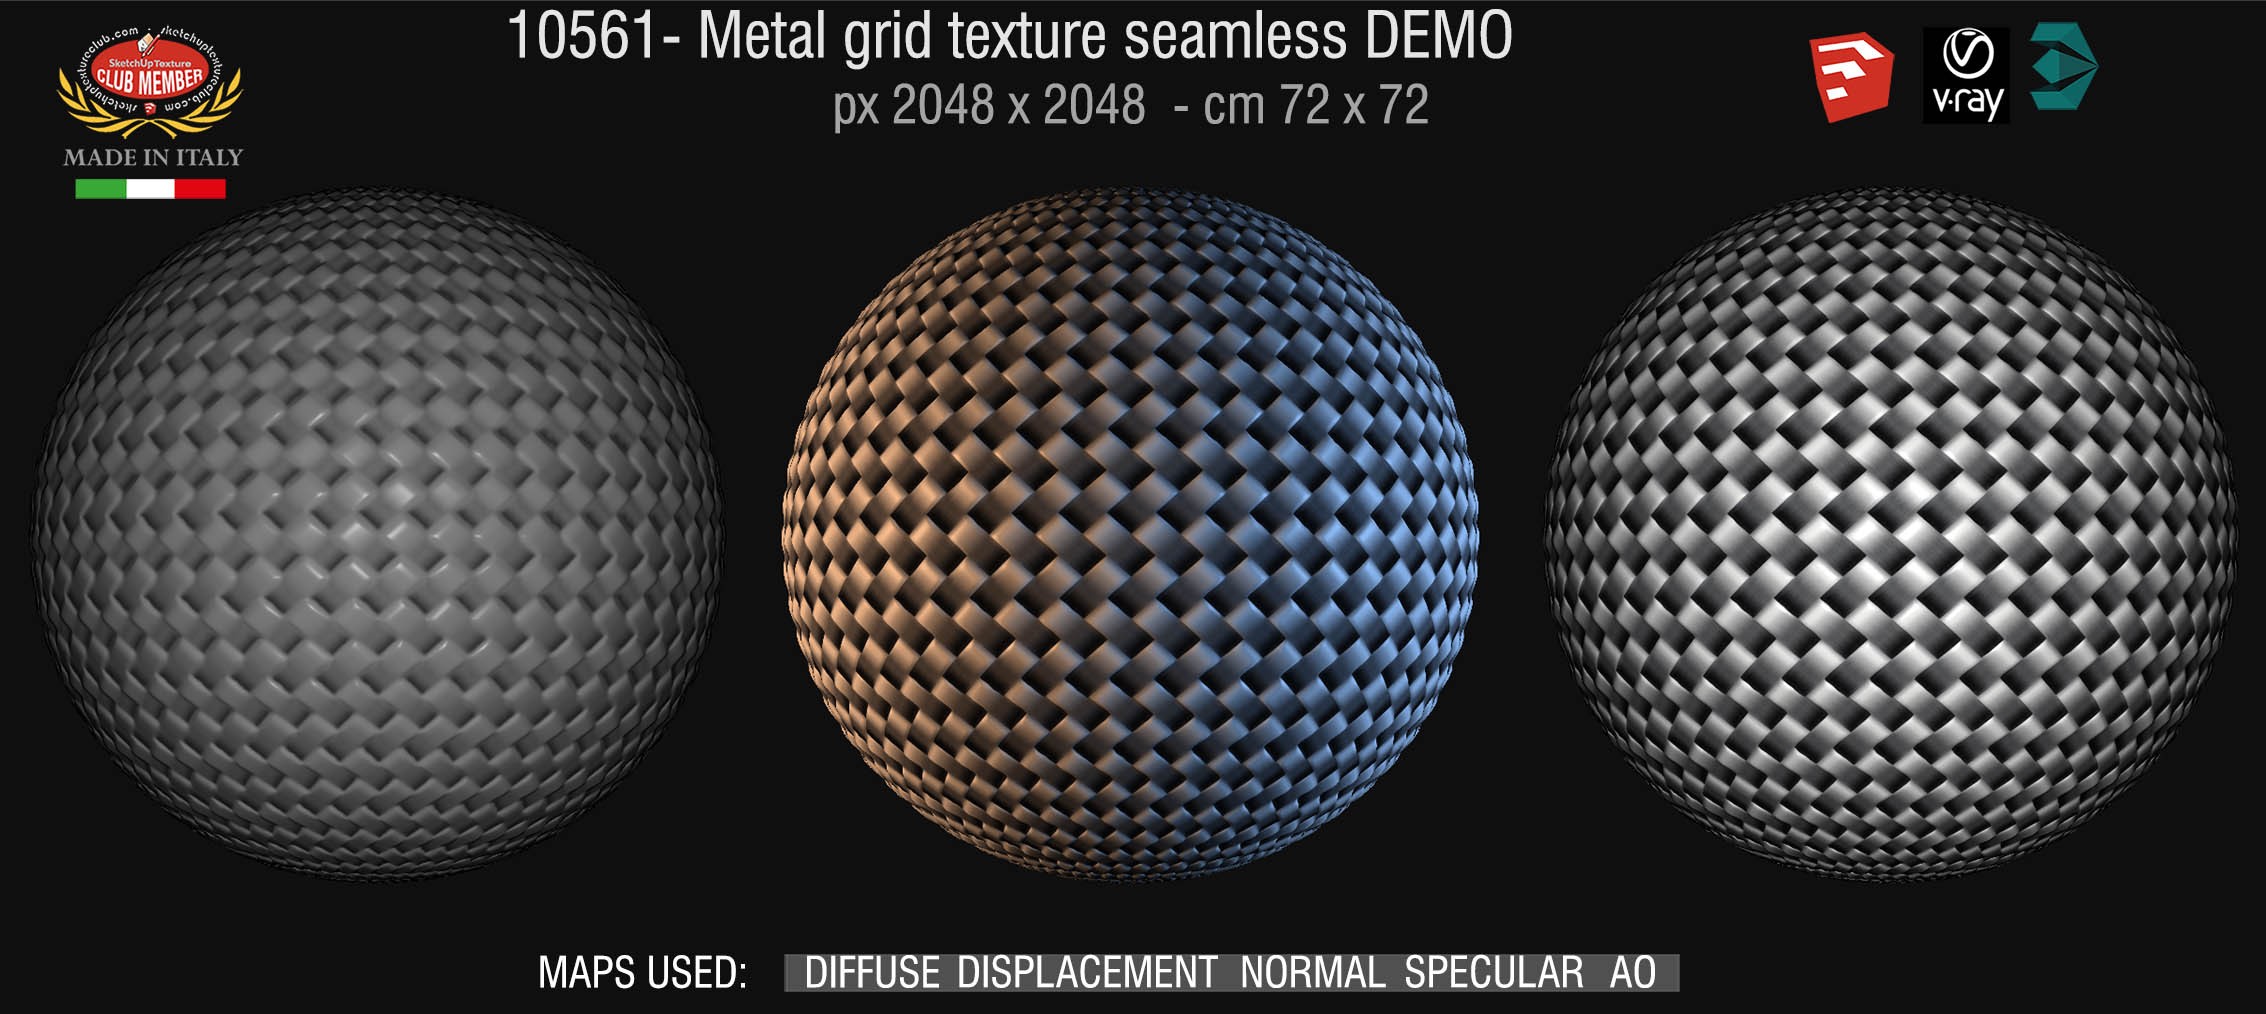 10561 HR Metal grid texture seamless + maps DEMO